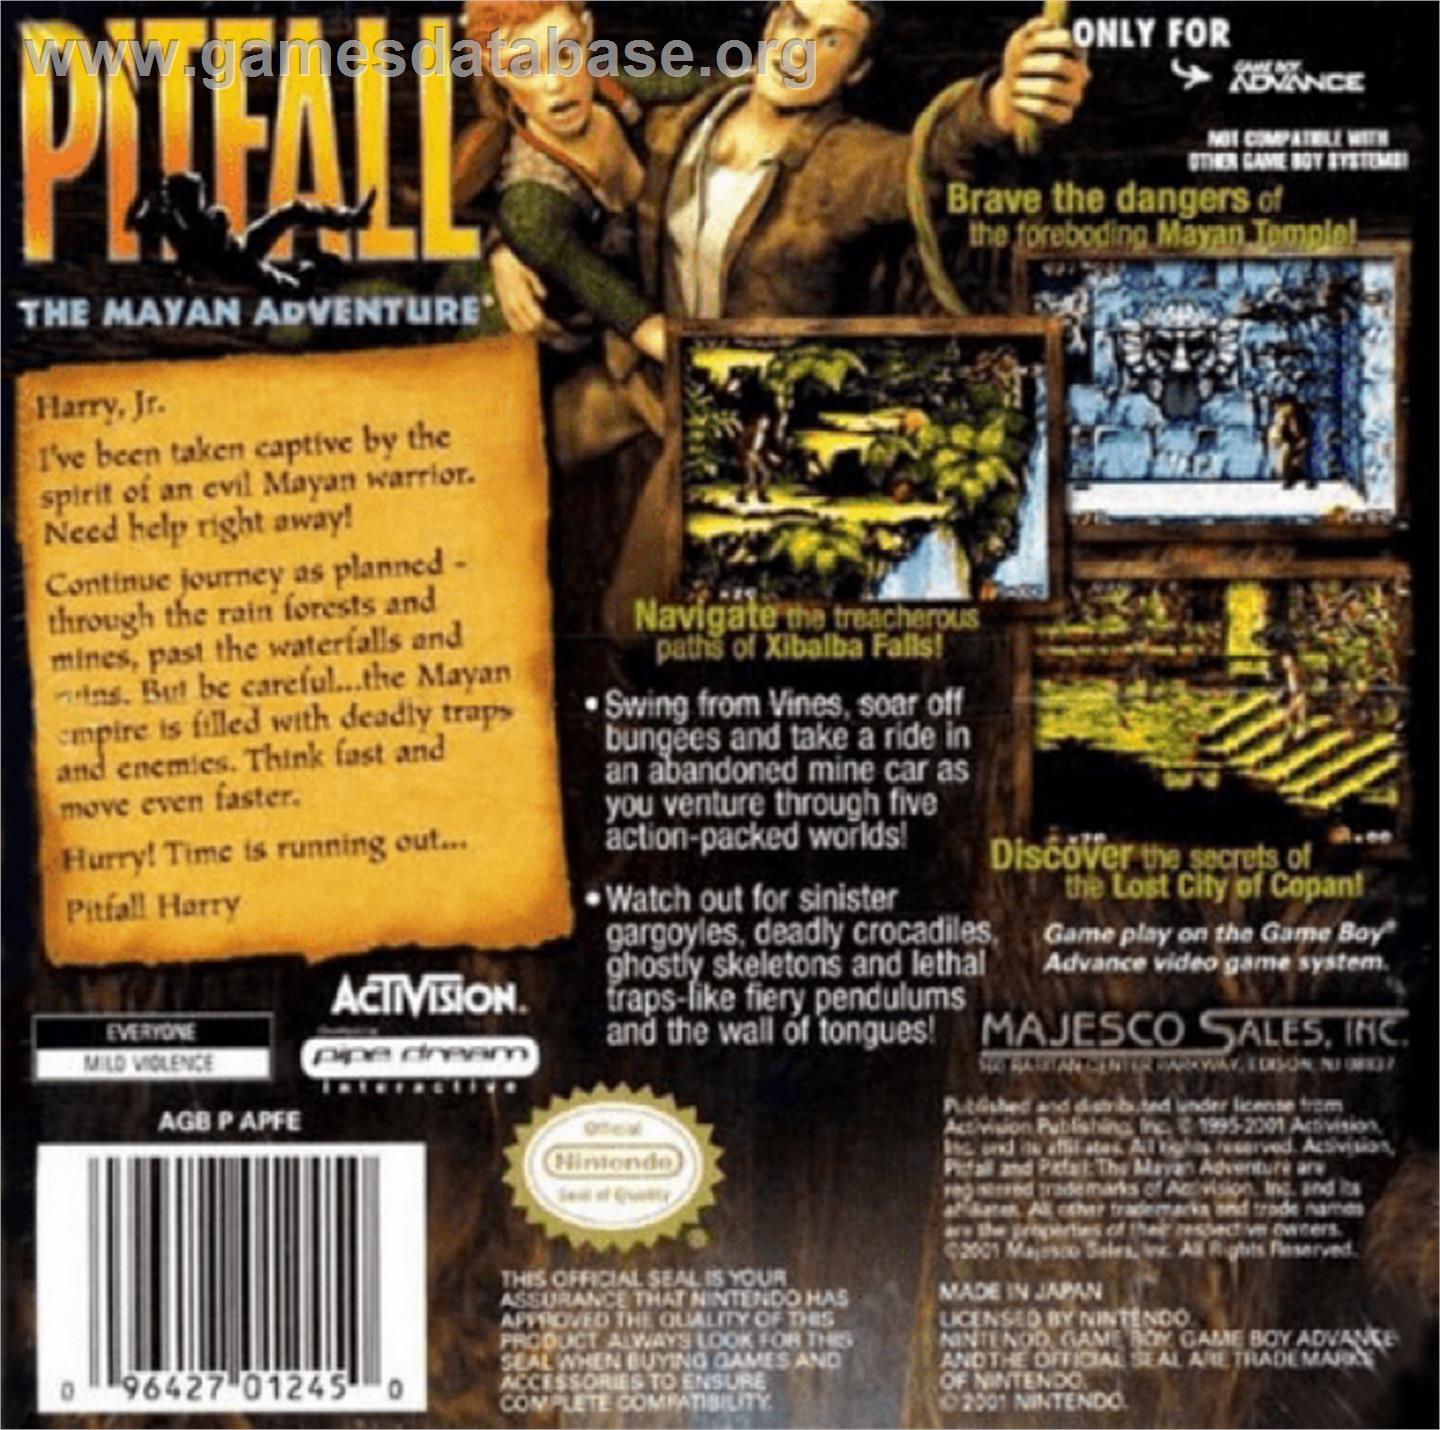 Pitfall: The Mayan Adventure - Nintendo Game Boy Advance - Artwork - Box Back